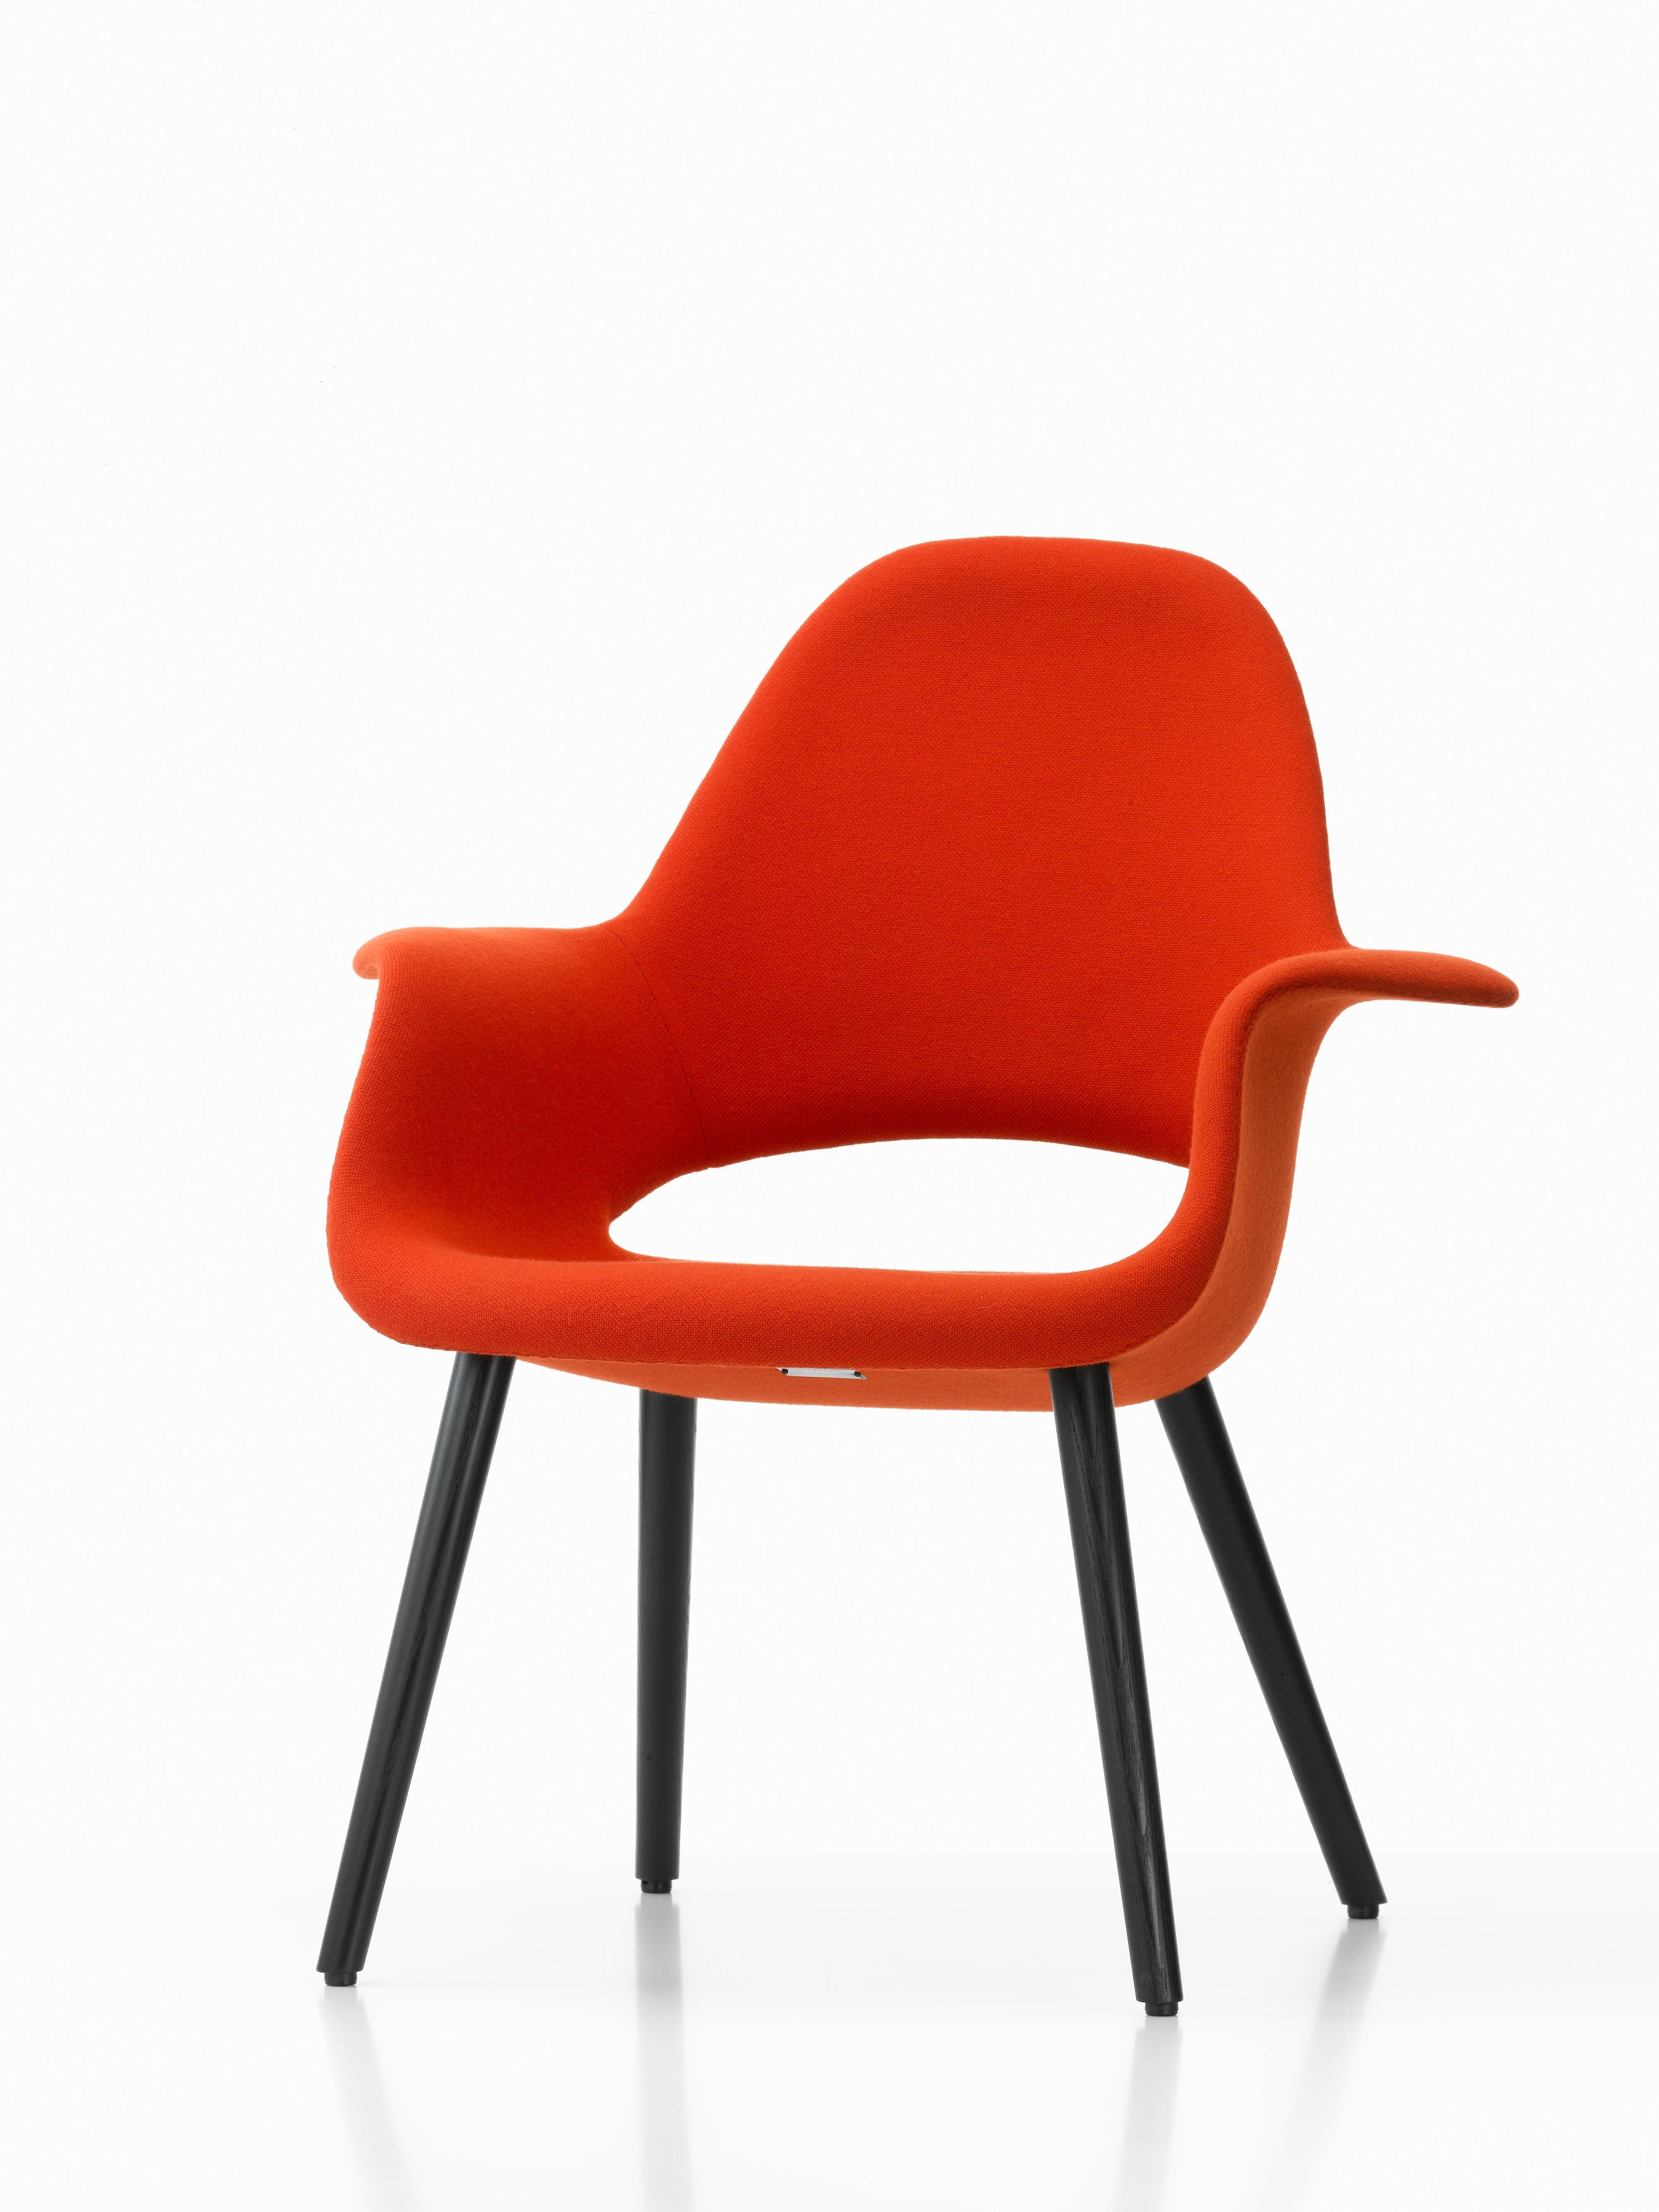 Swiss Vitra Organic Chair in Red Hopsack & Black Ash by Charles Eames & Eero Saarinen For Sale